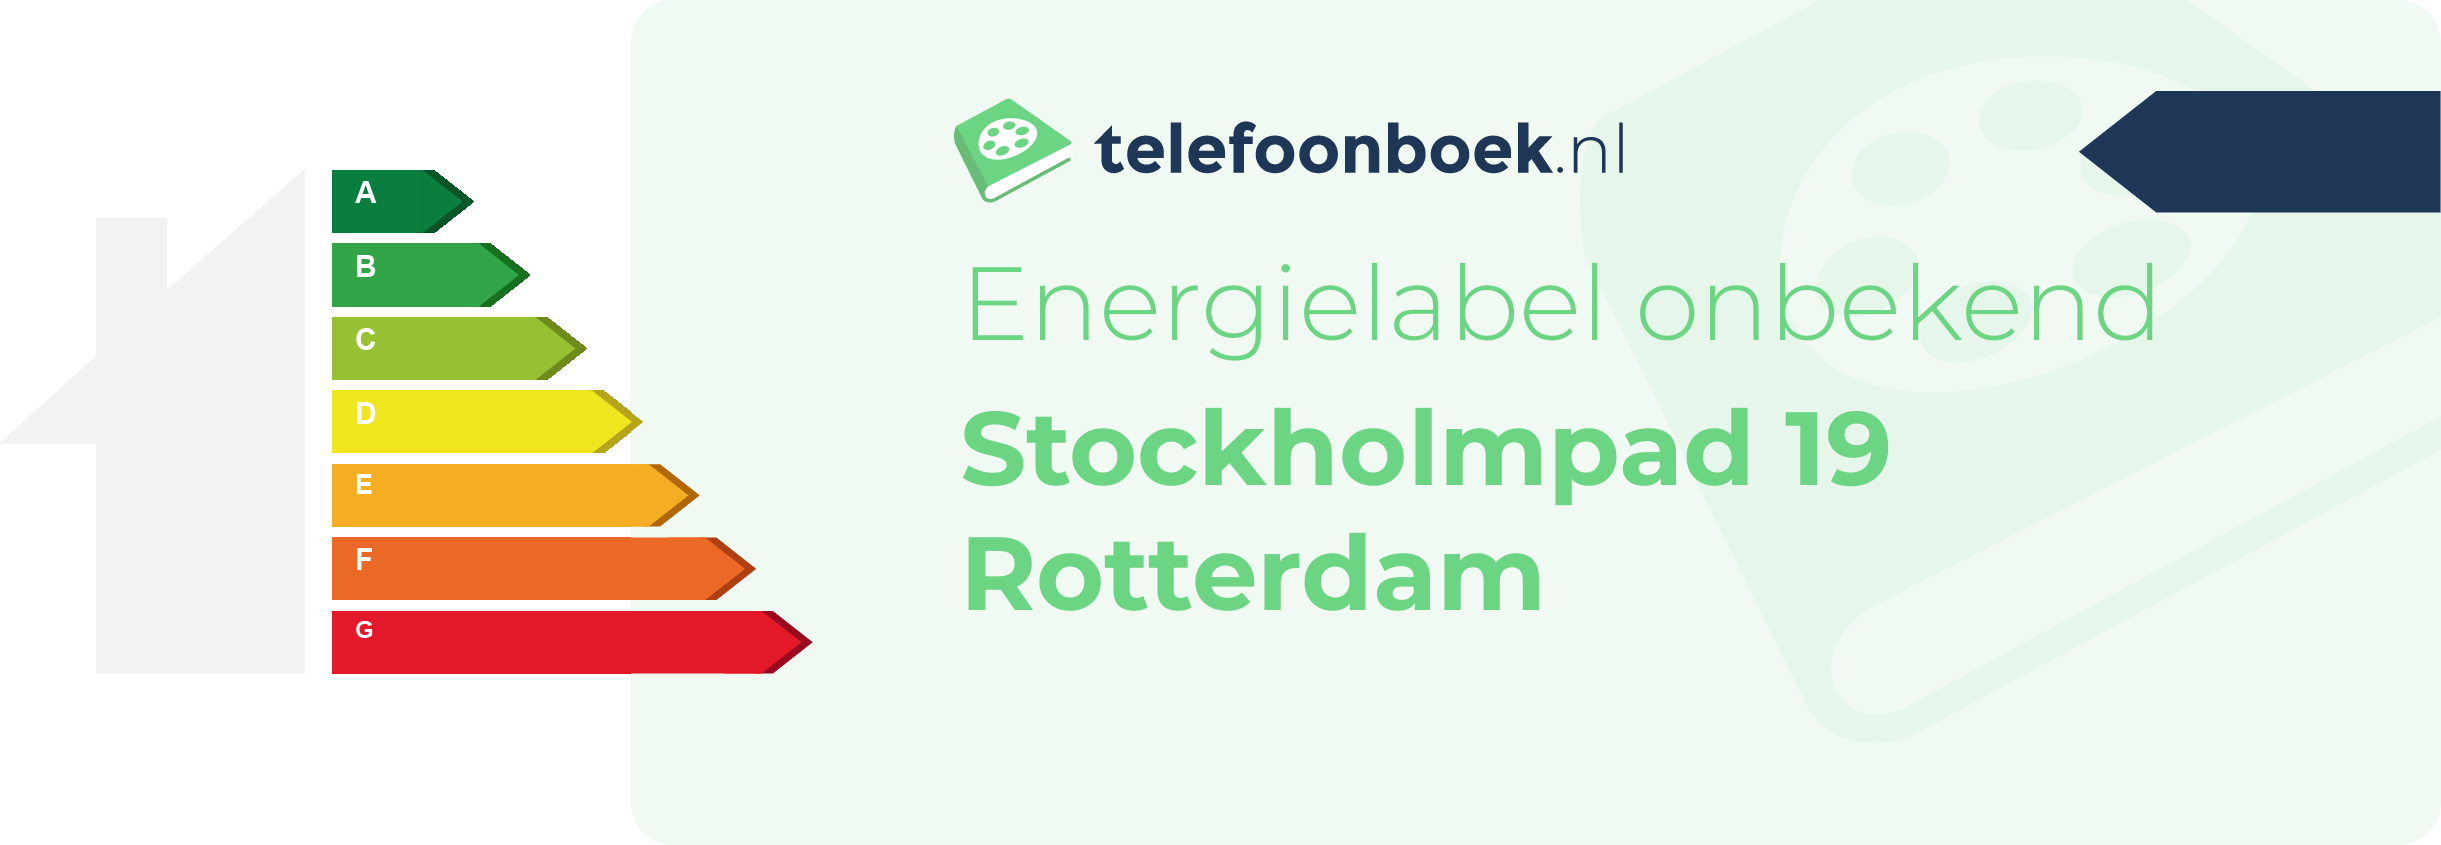 Energielabel Stockholmpad 19 Rotterdam